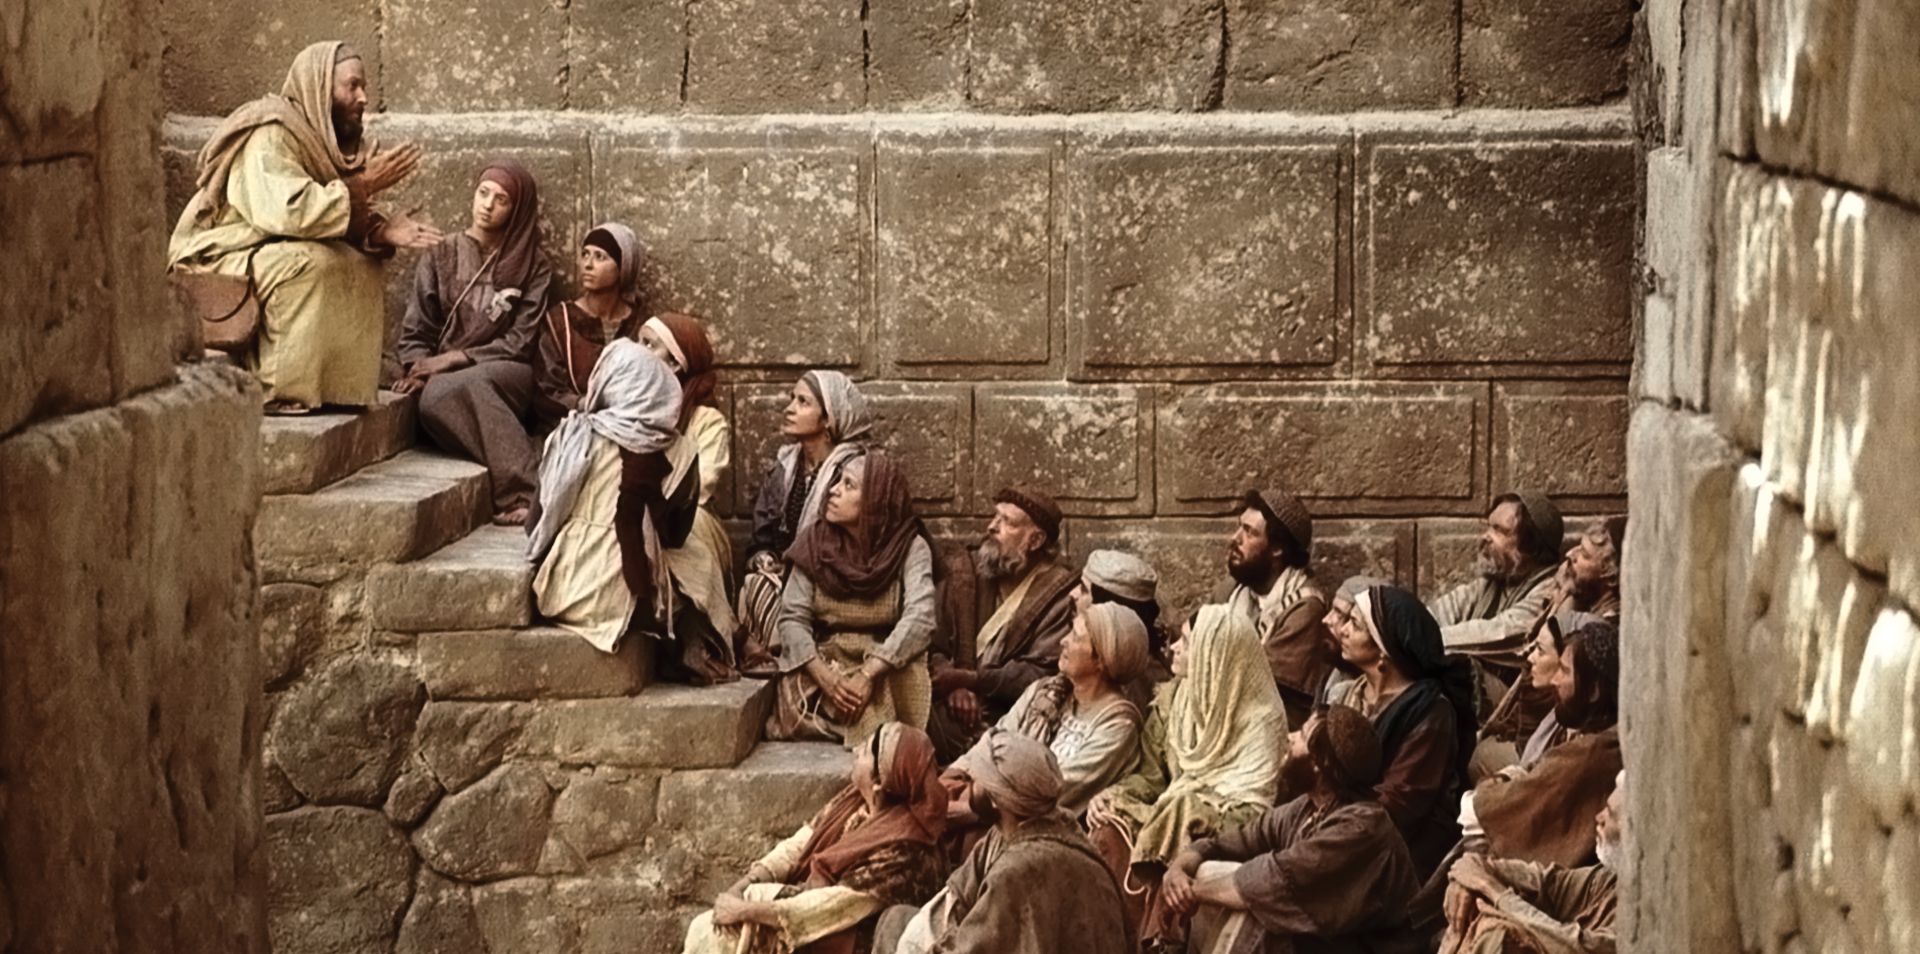 Men and women listen to Paul's teachings of Jesus Christ.